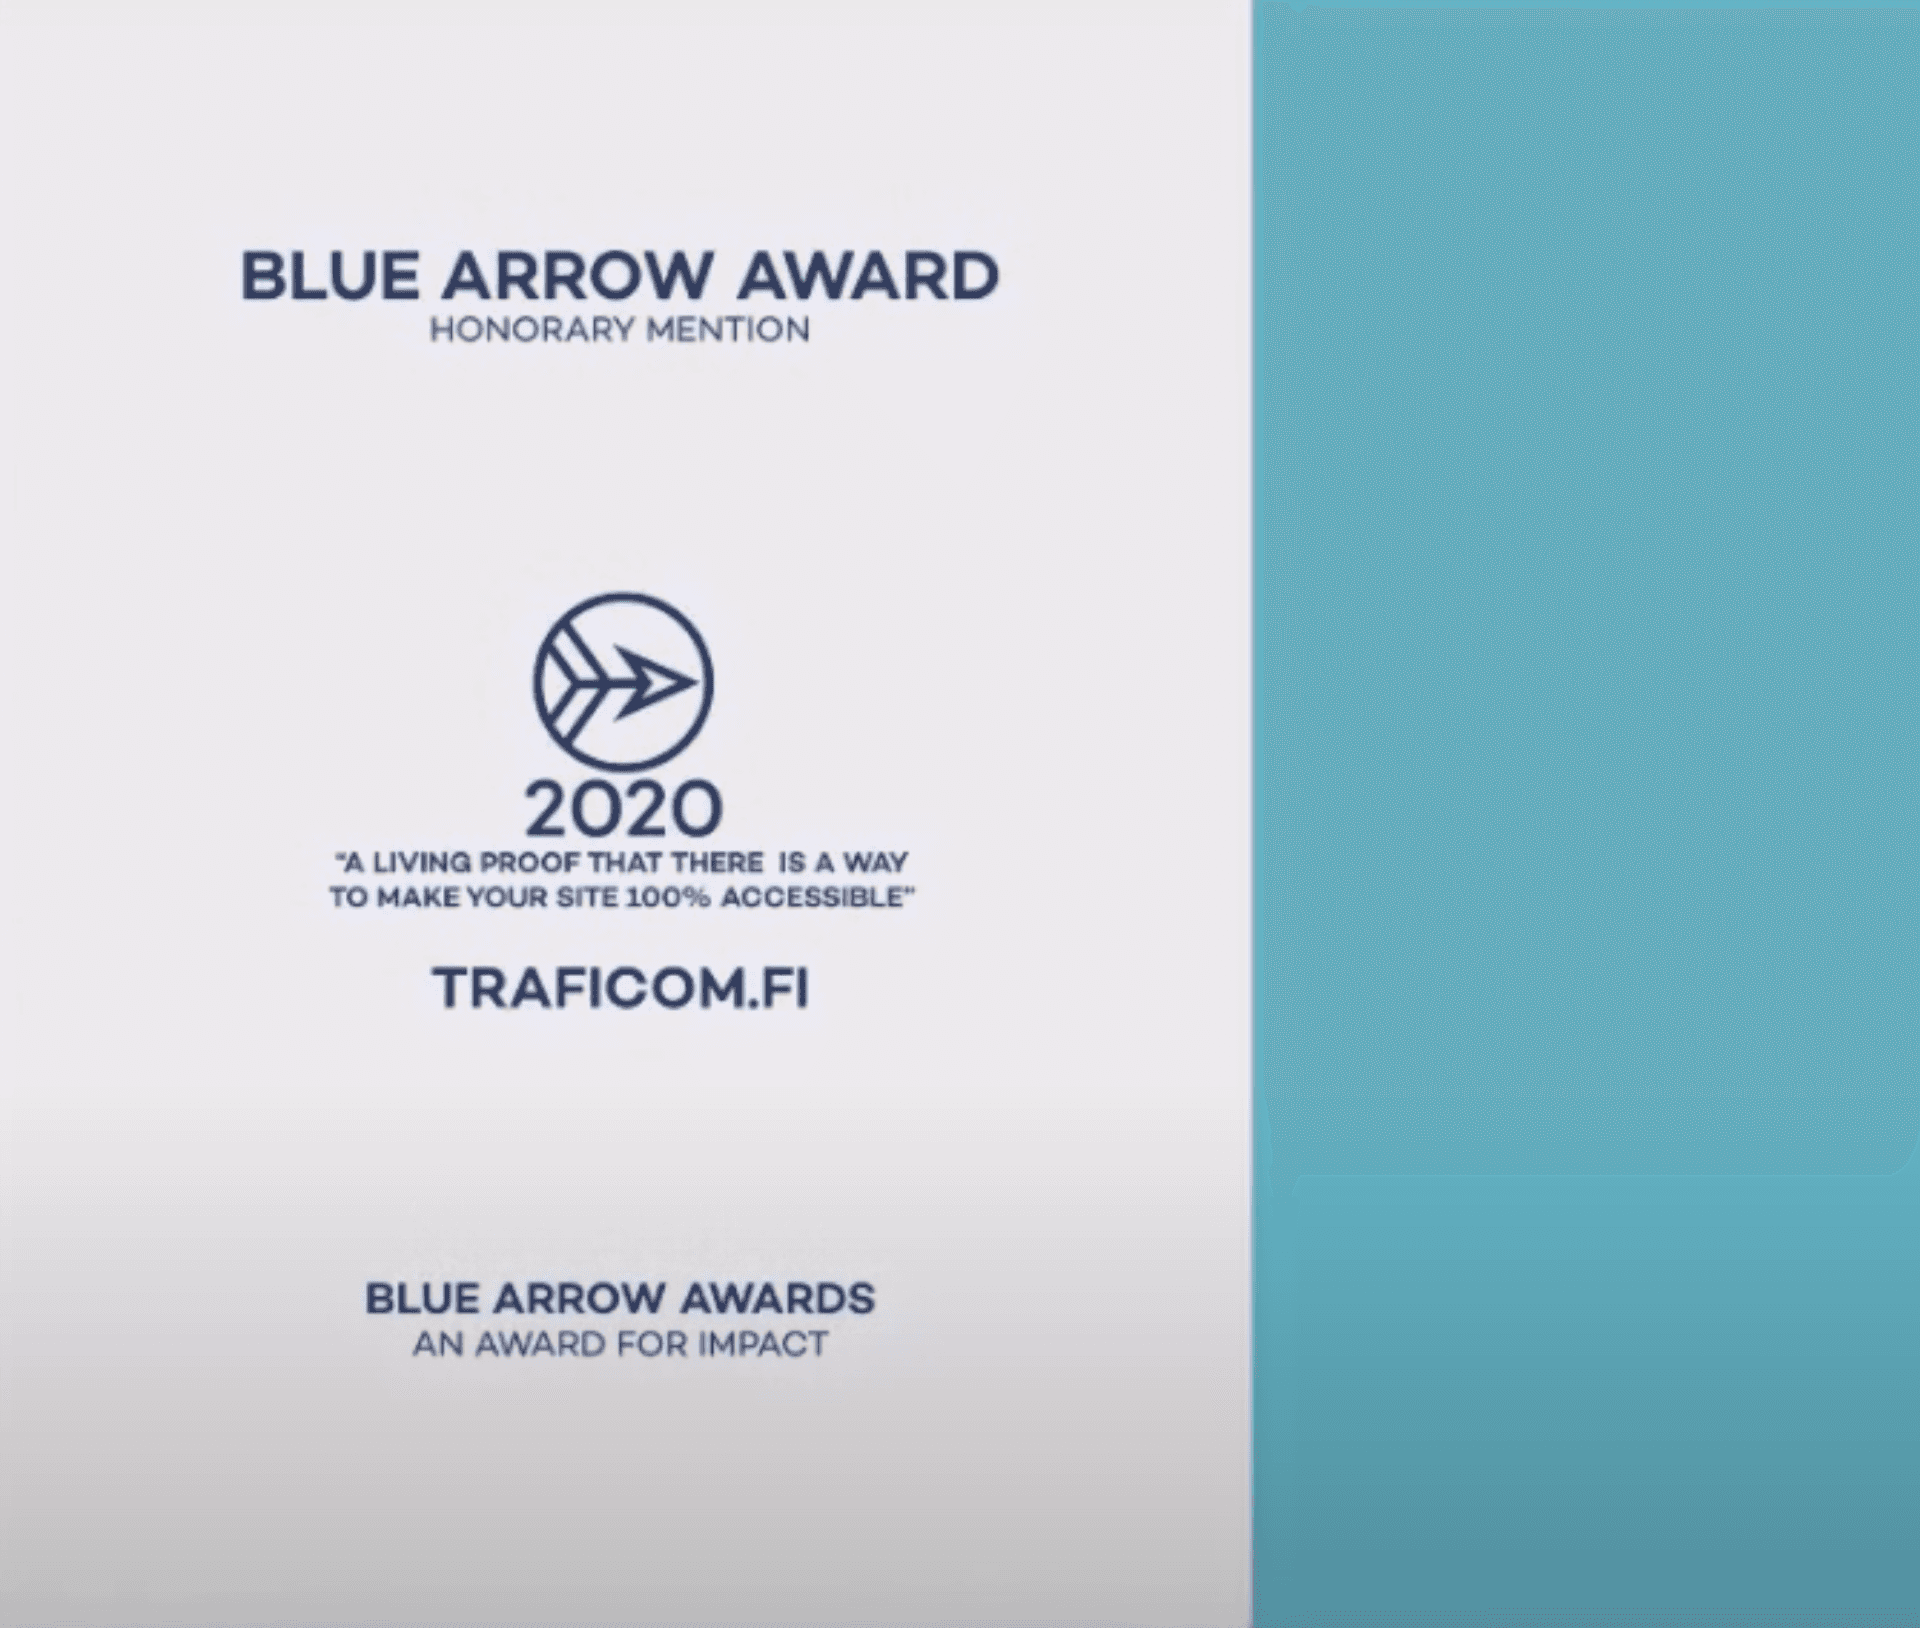 Certificate of the Blue Arrow Award 2020